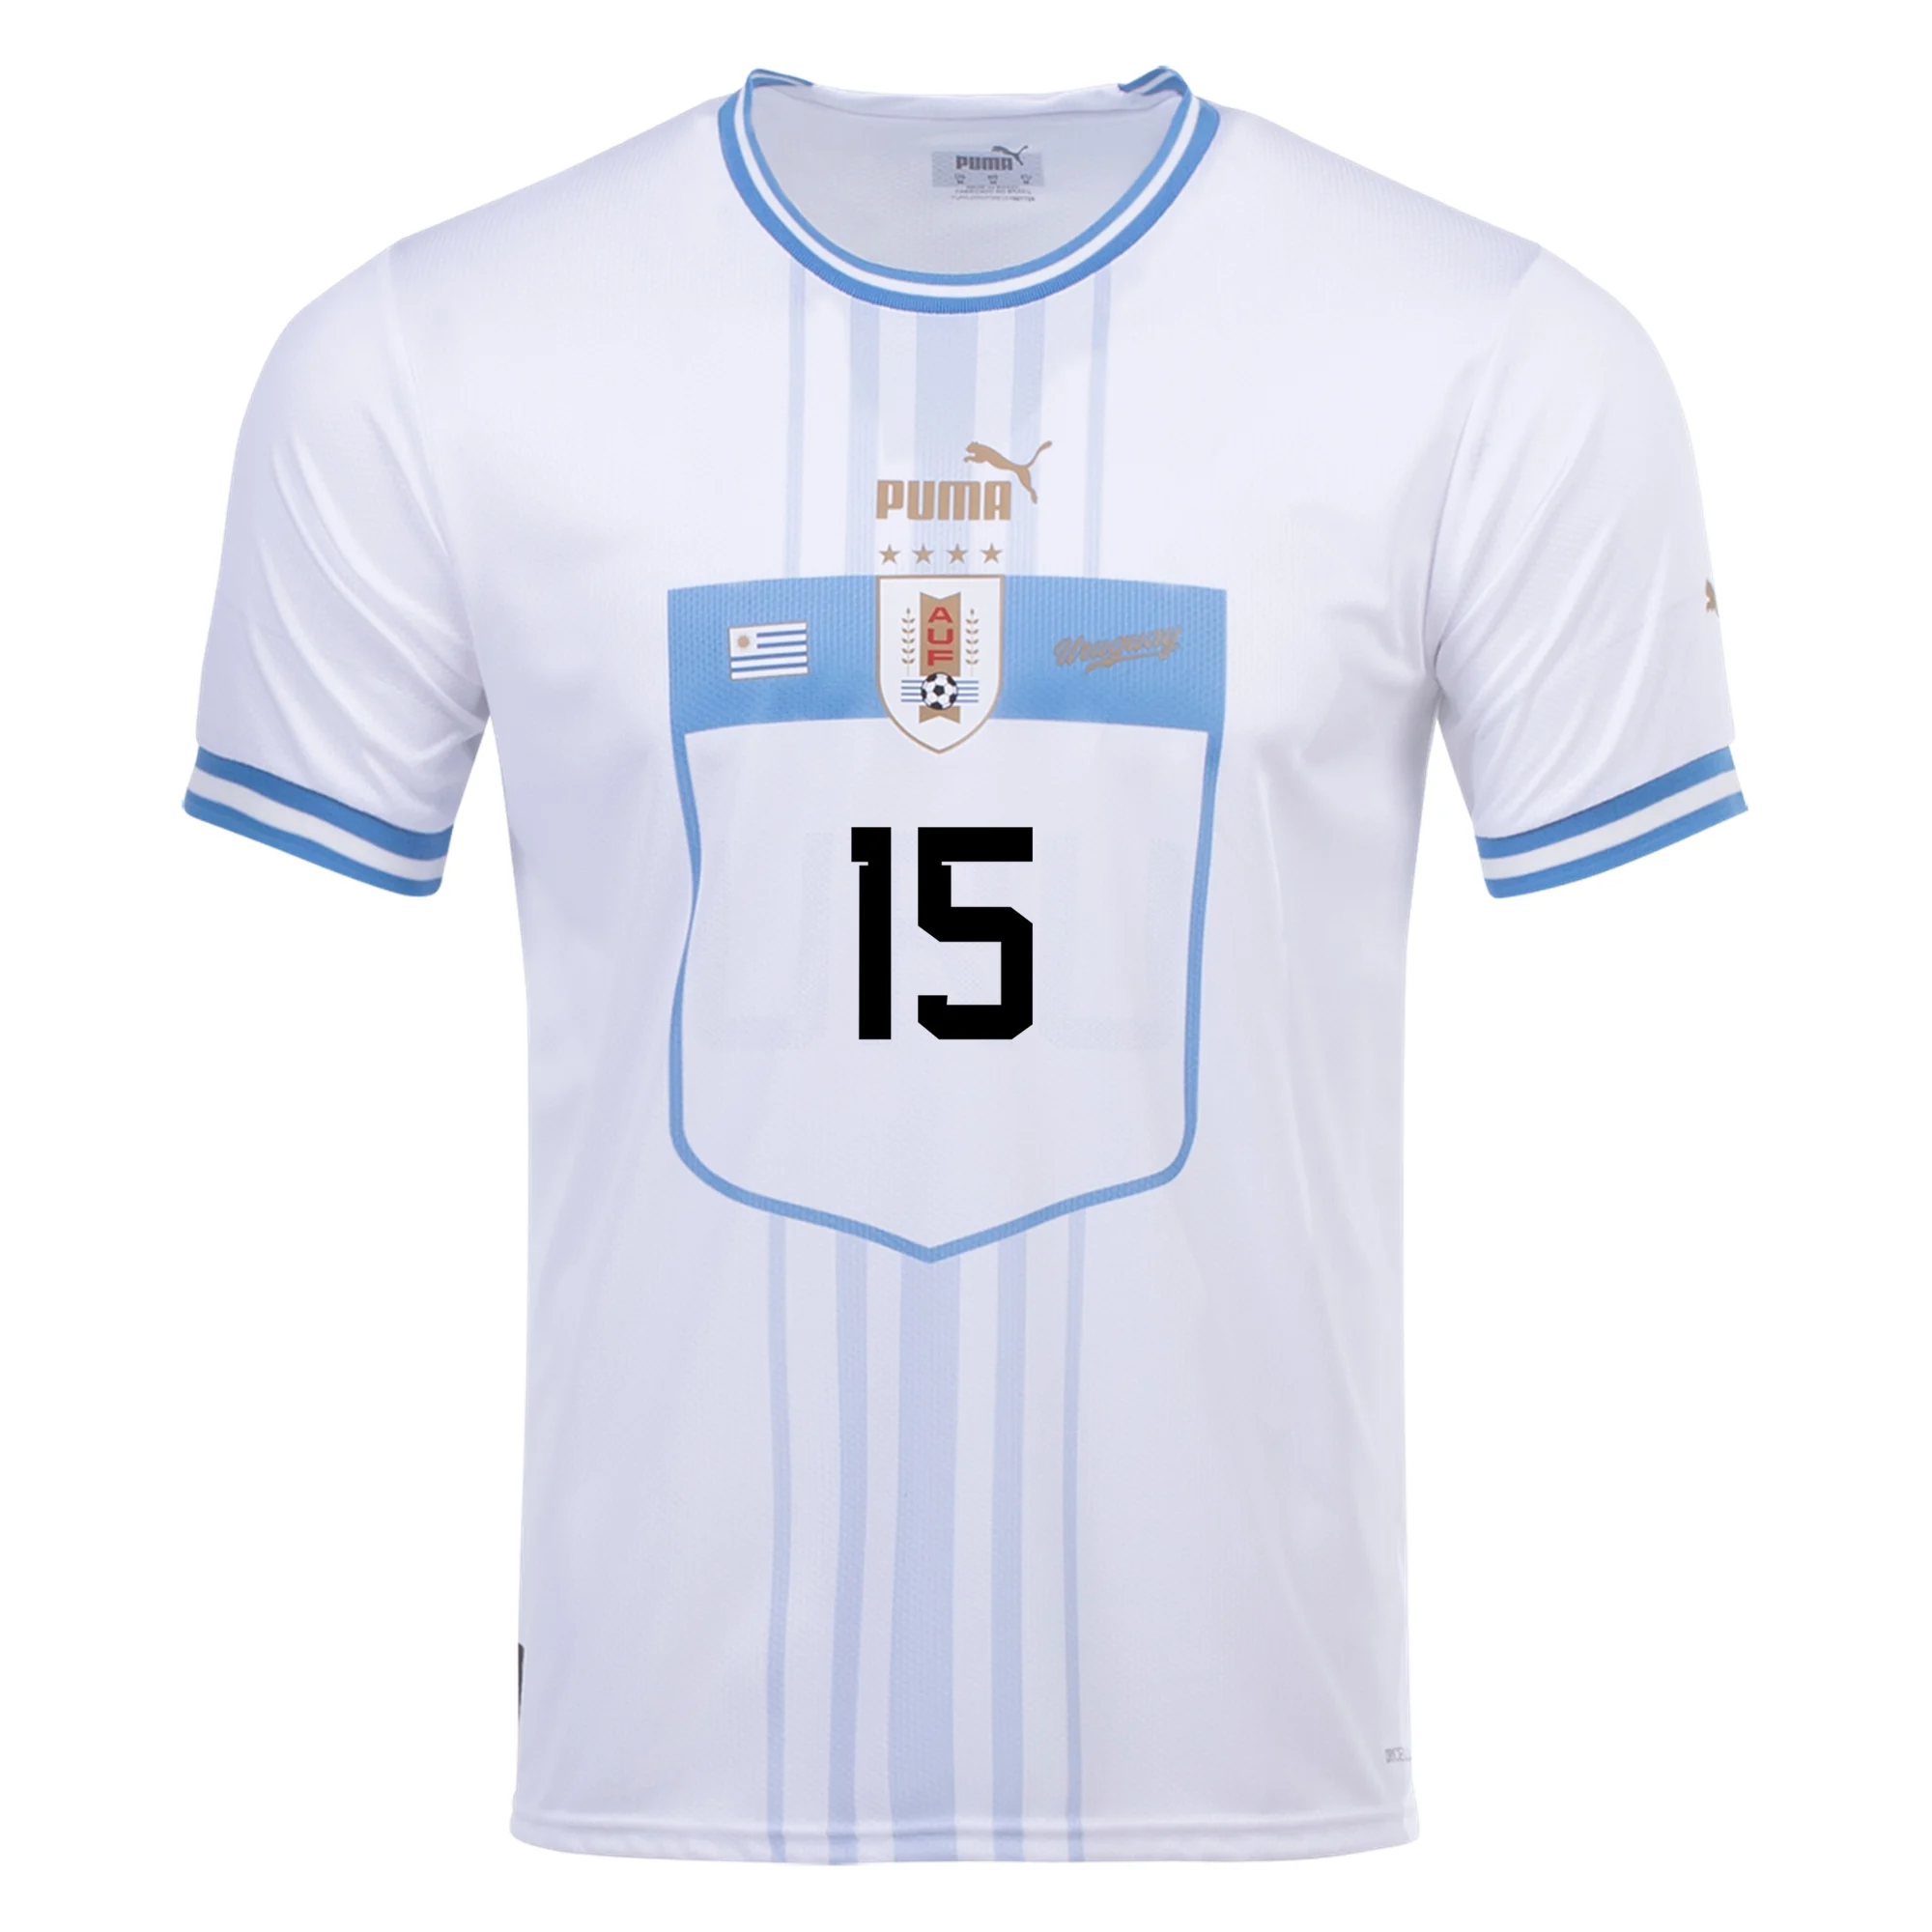 Uruguay's World Cup legends' jerseys